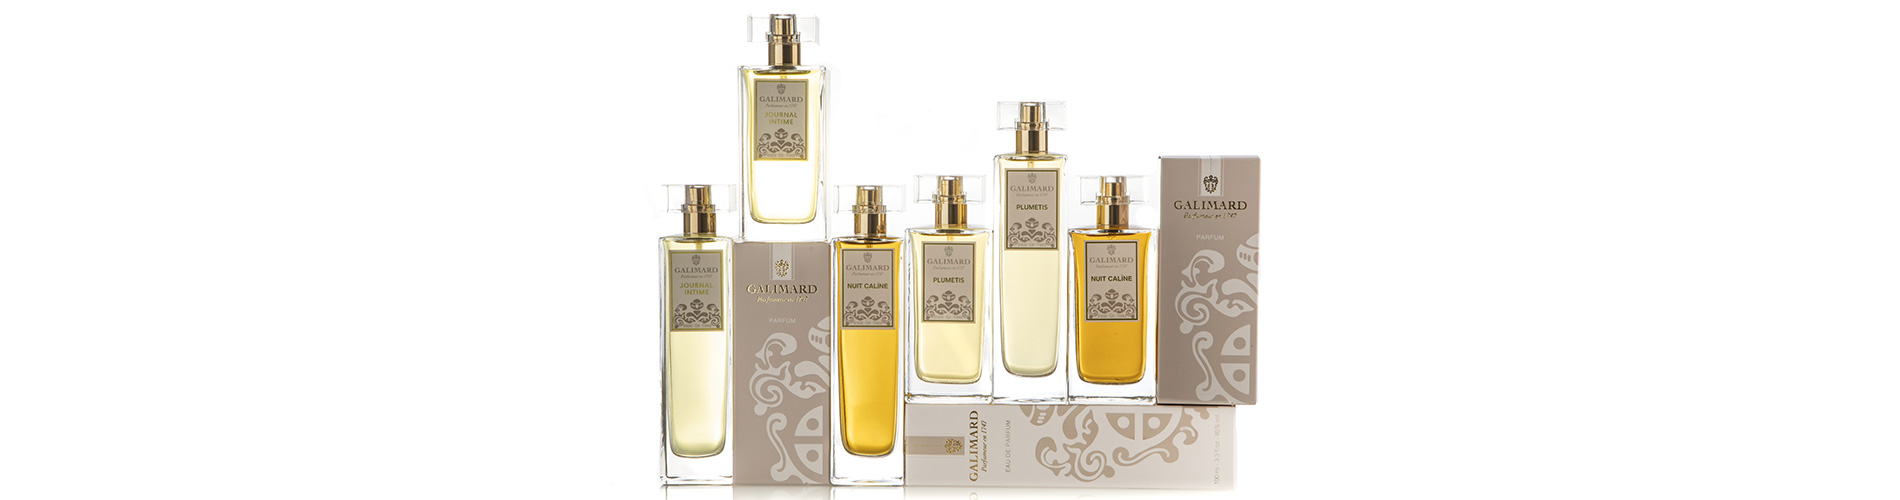 The boutique - Galimard - Perfumer in Grasse since 1747